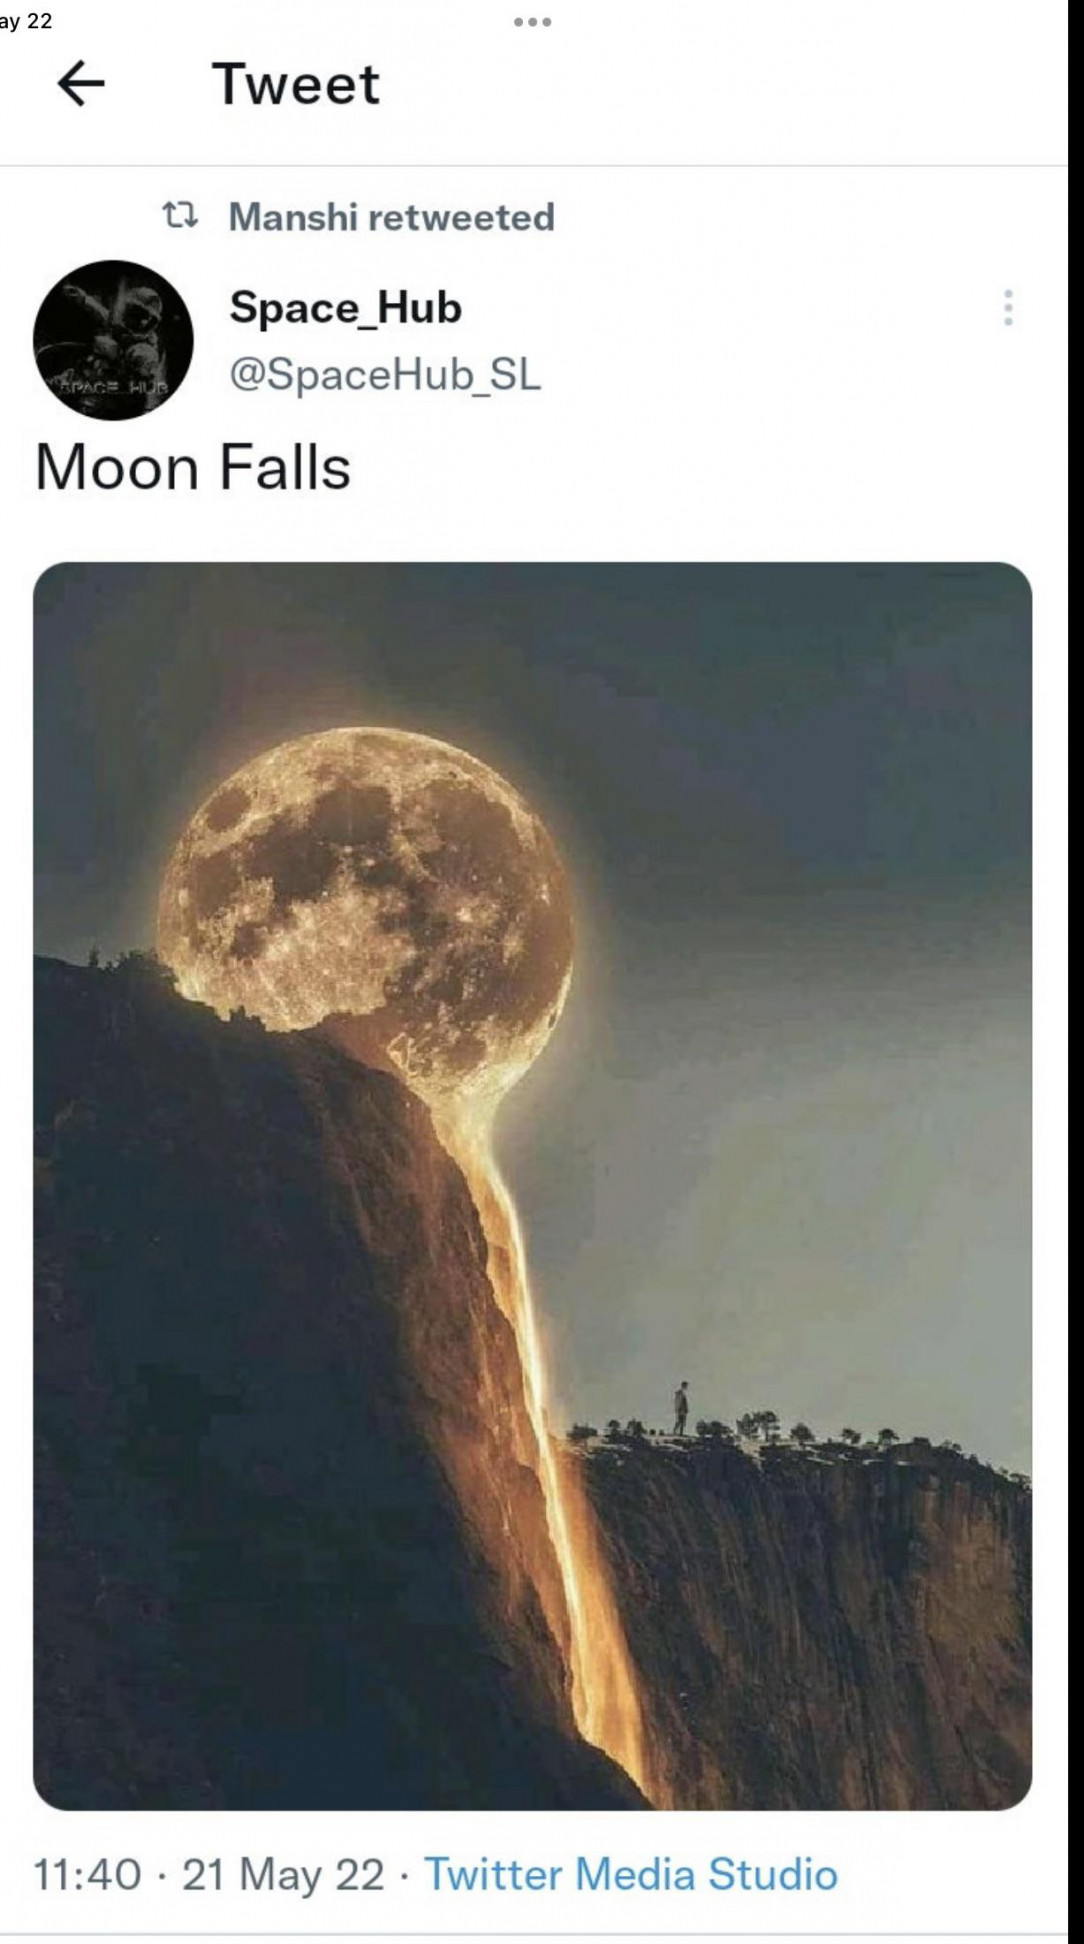 The Moon Falls